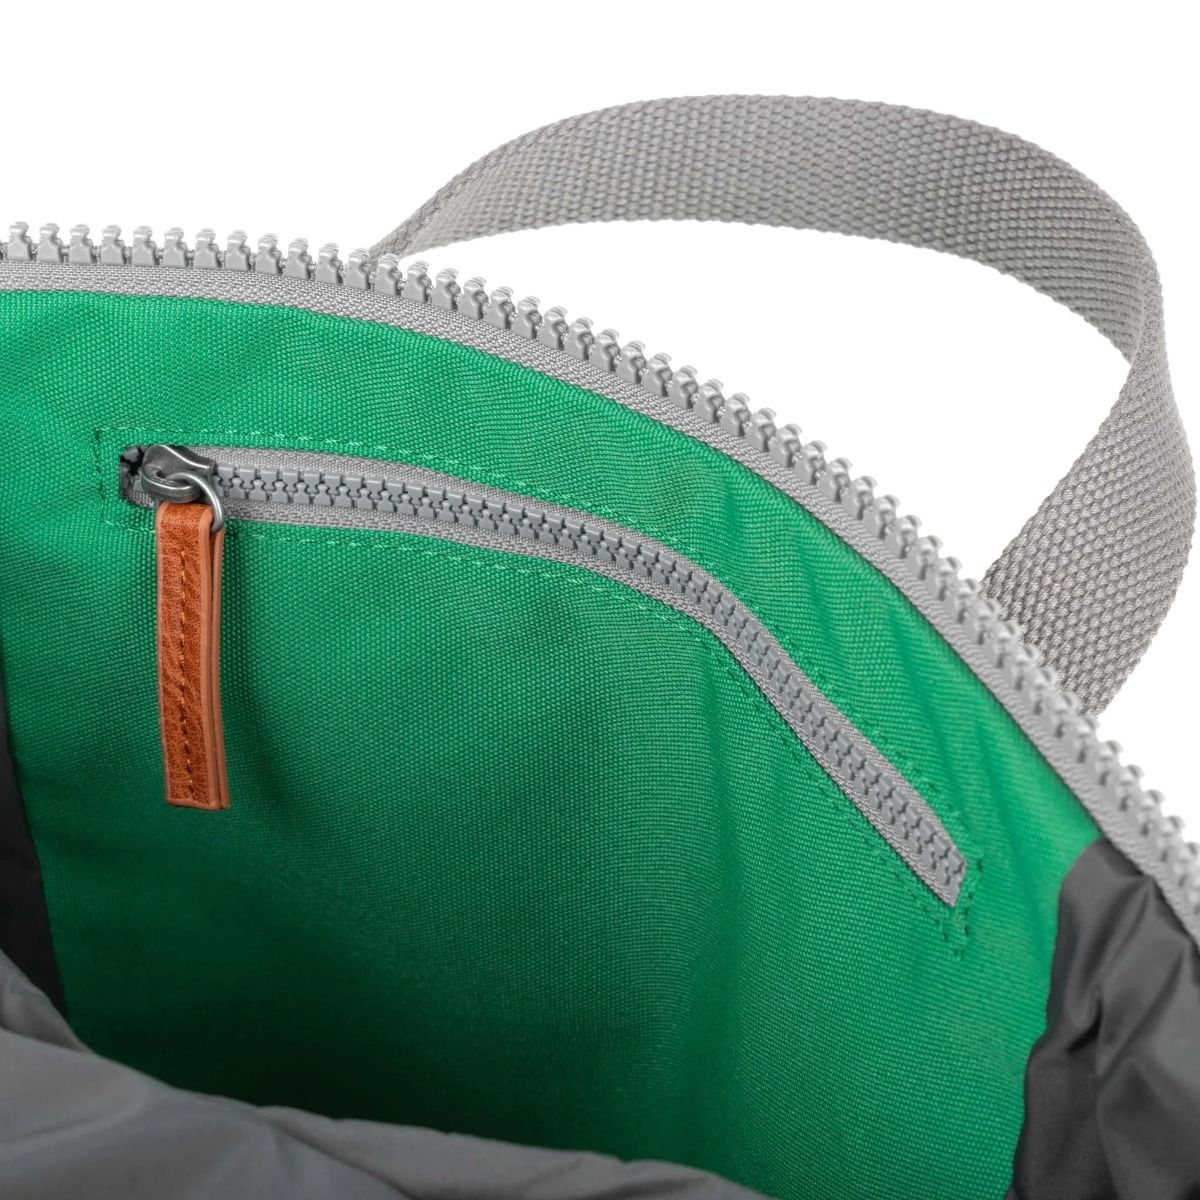 Roka Finchley A Medium Vegan Bag in Mountain Green inside pocket detail